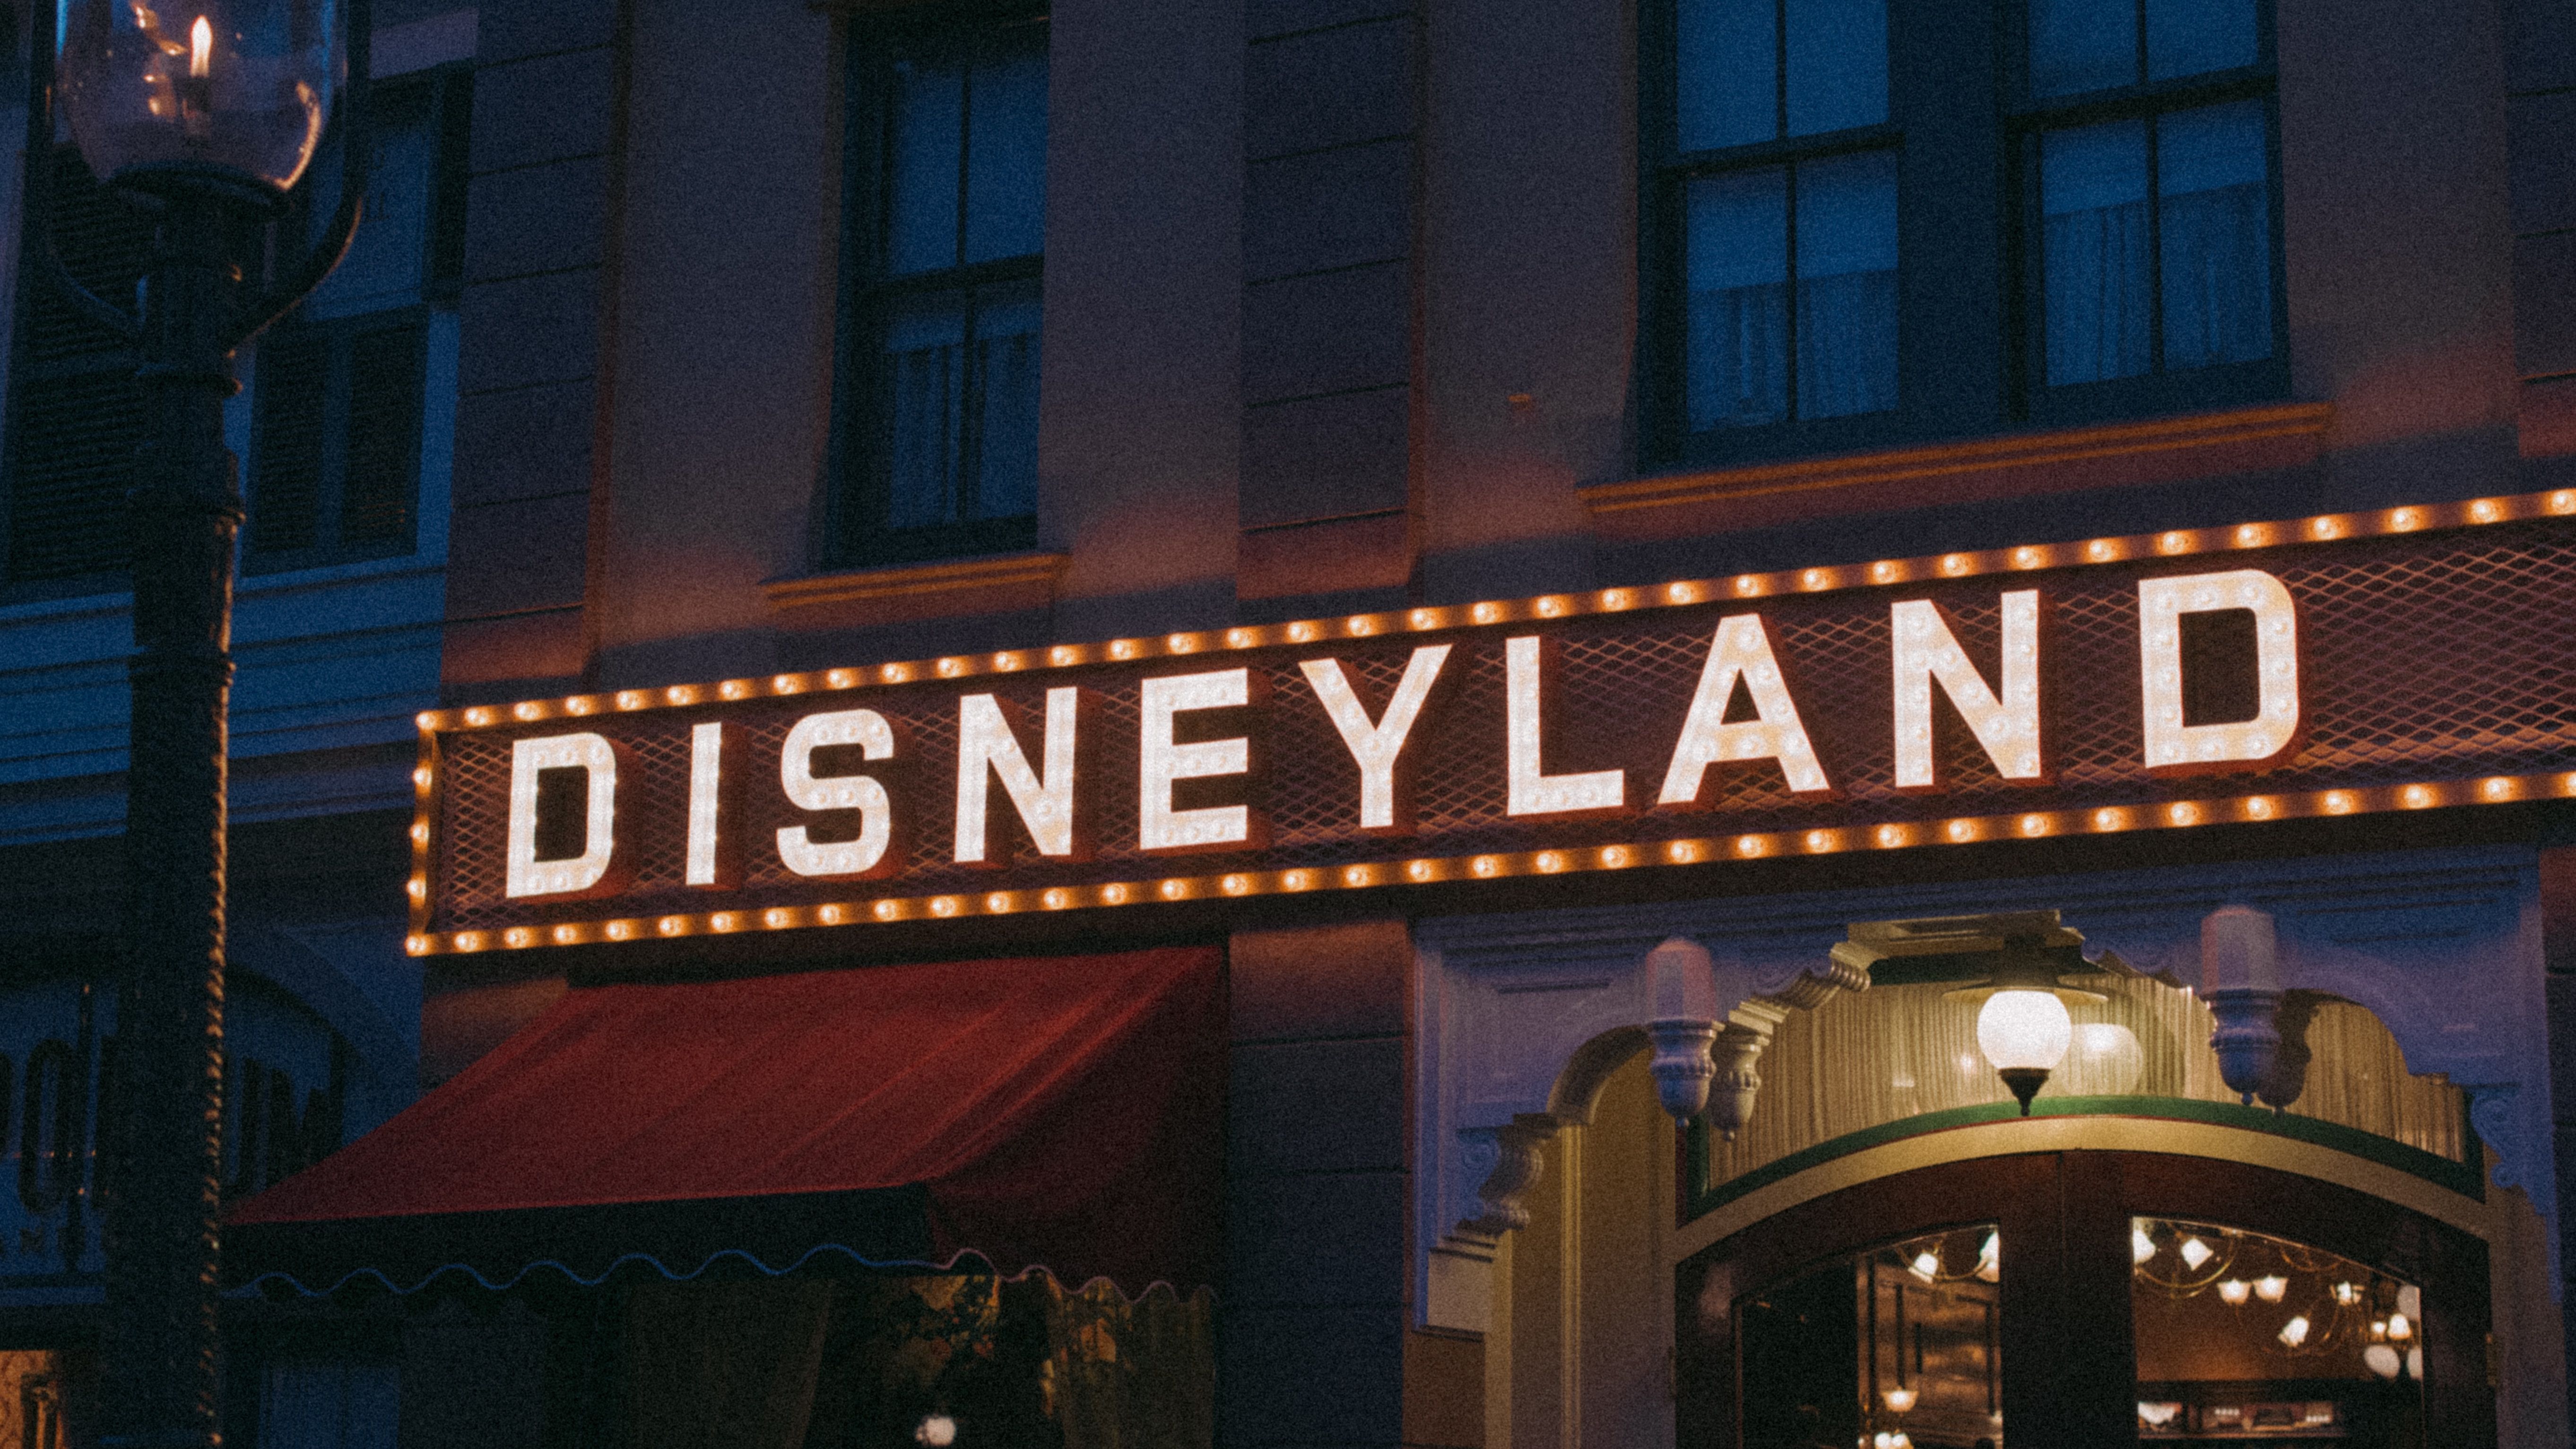 Disneyland Sign In South Harbor Boulevard, Anaheim, CA, USA